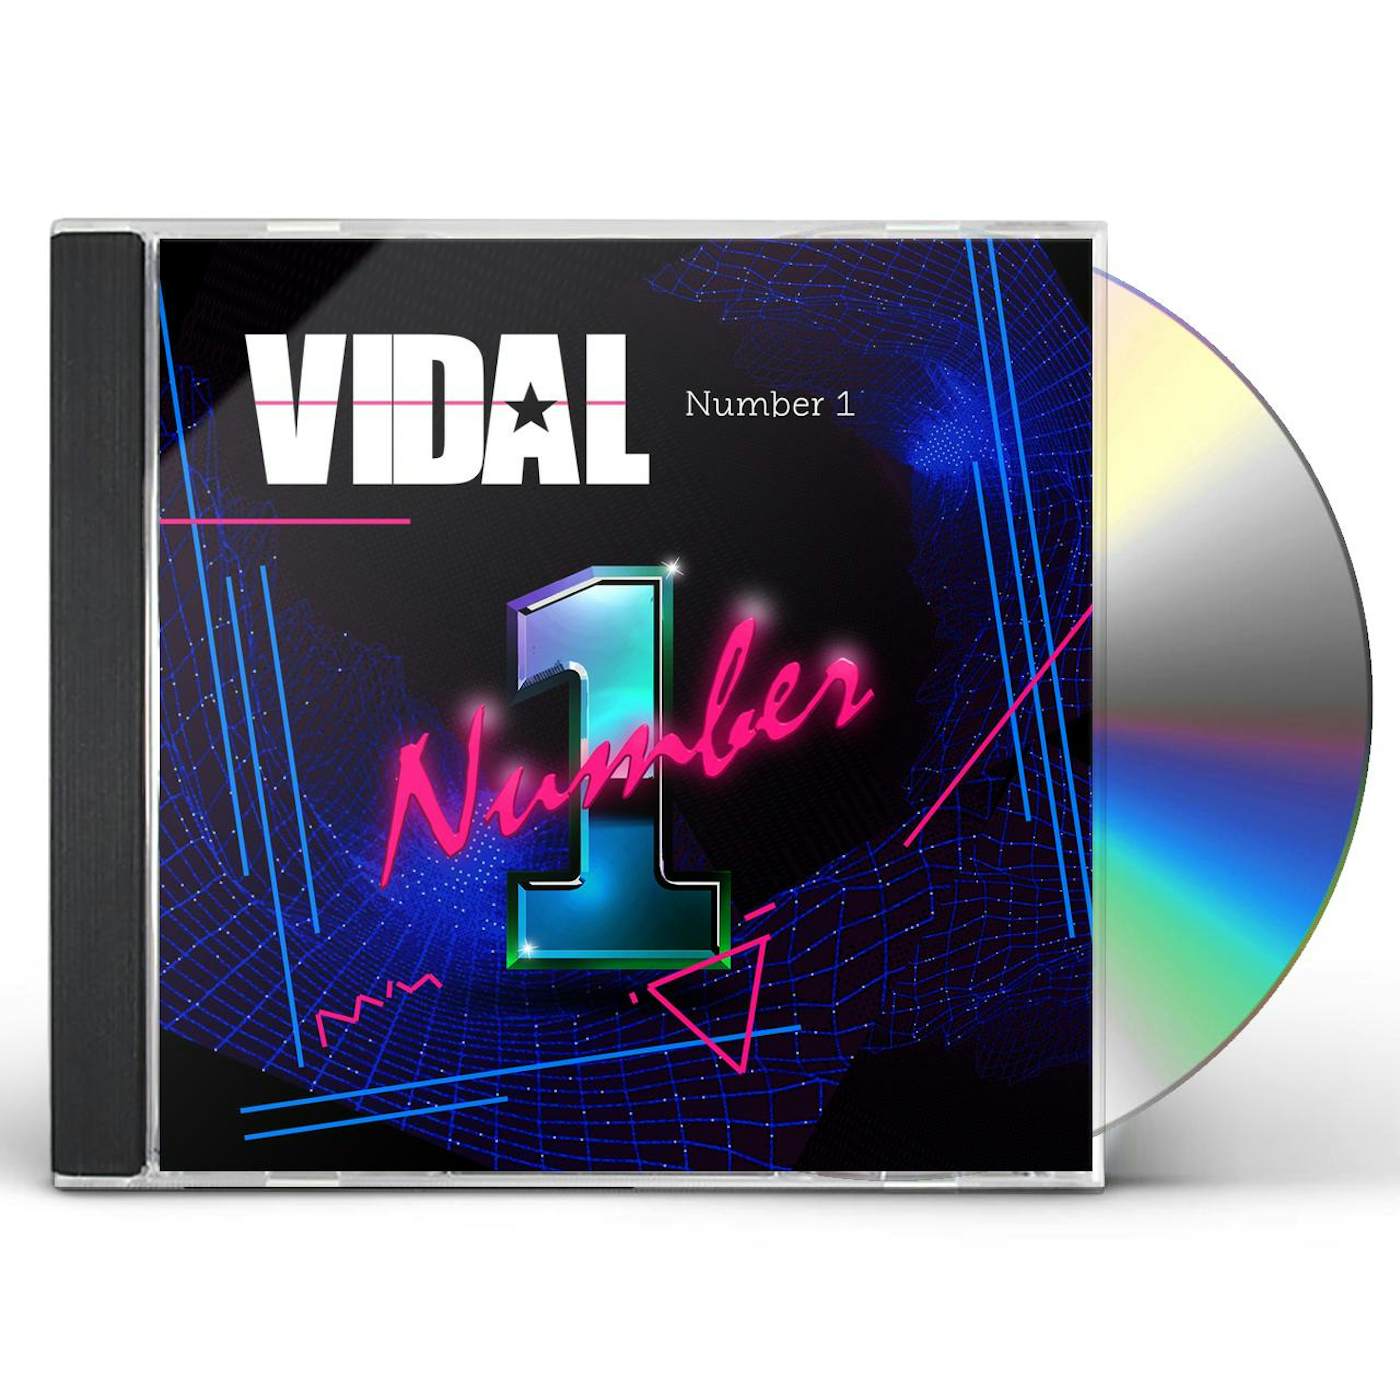 Vidal NUMBER 1 CD